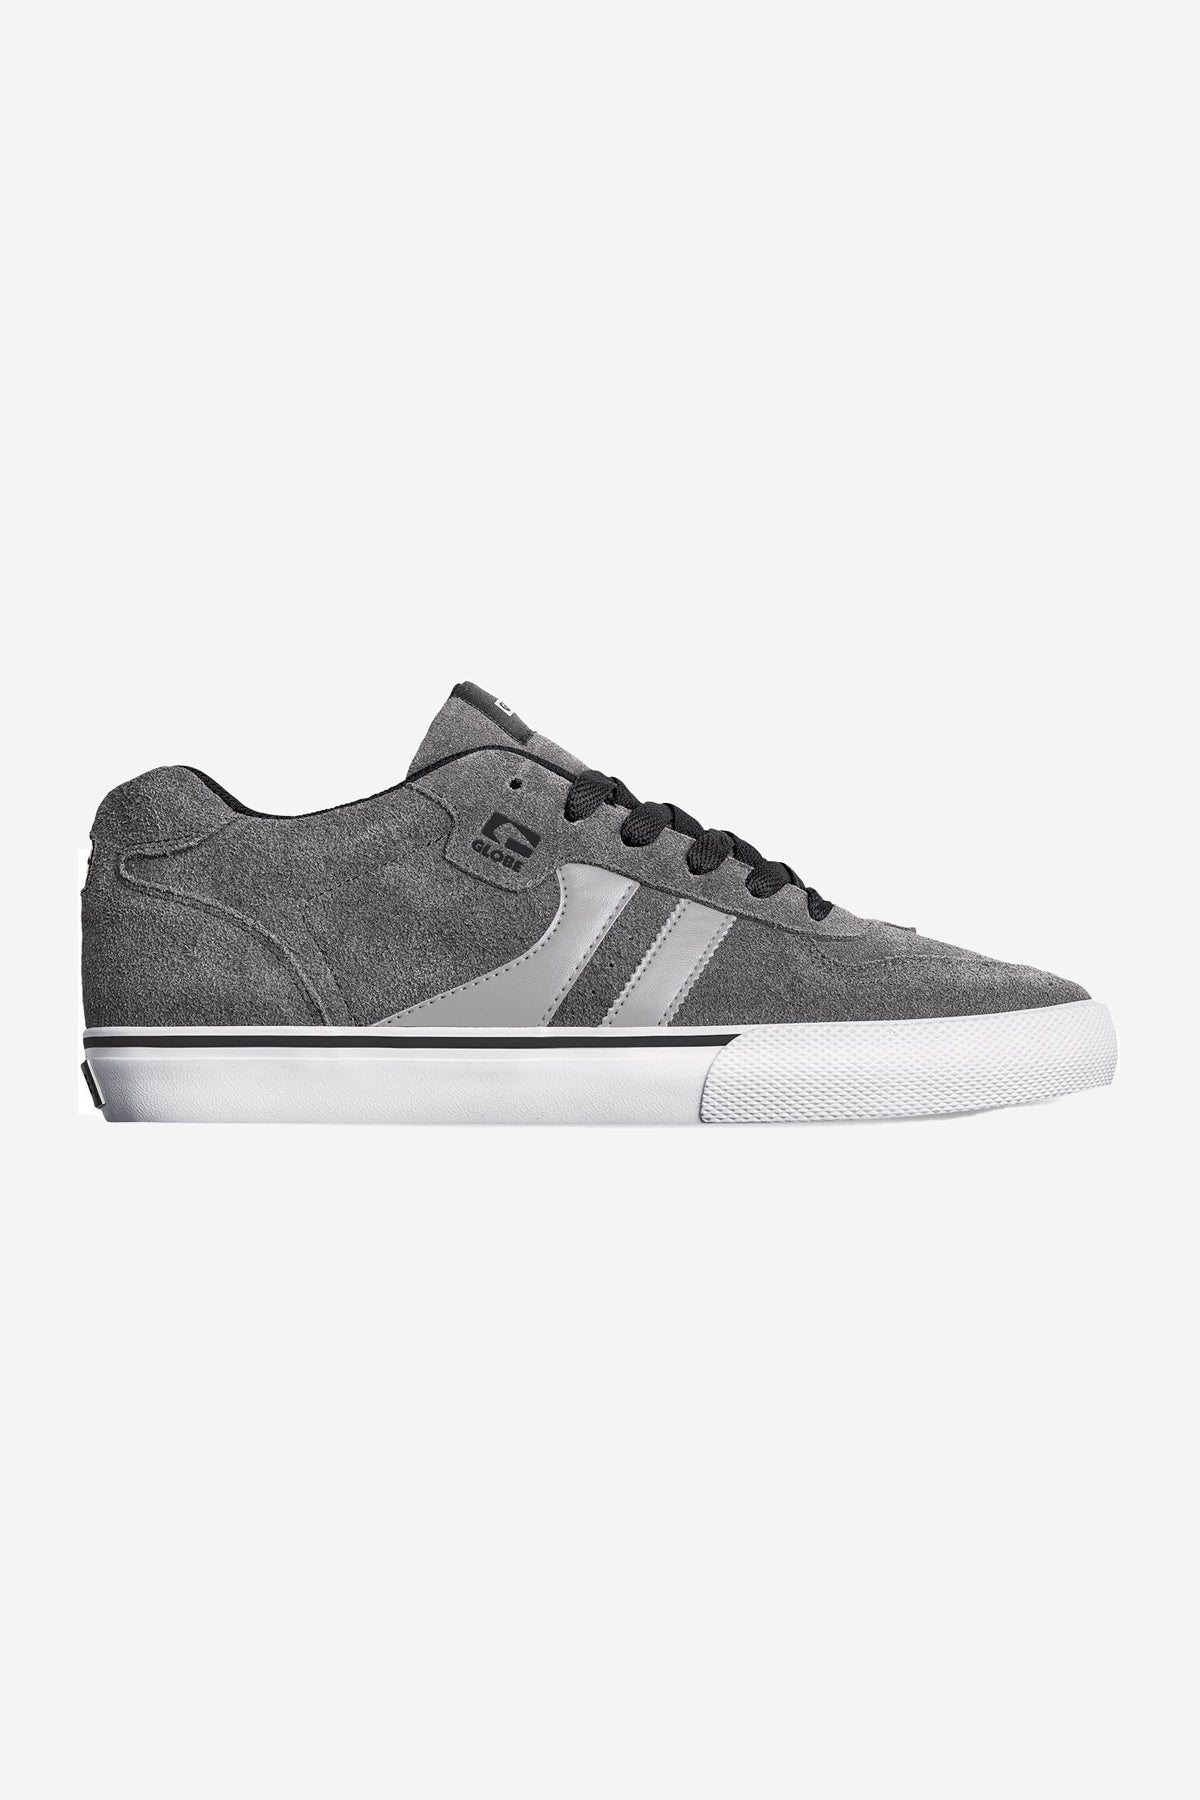 Globe - Encore 2 - Charcoal/Grey - Skate Shoes